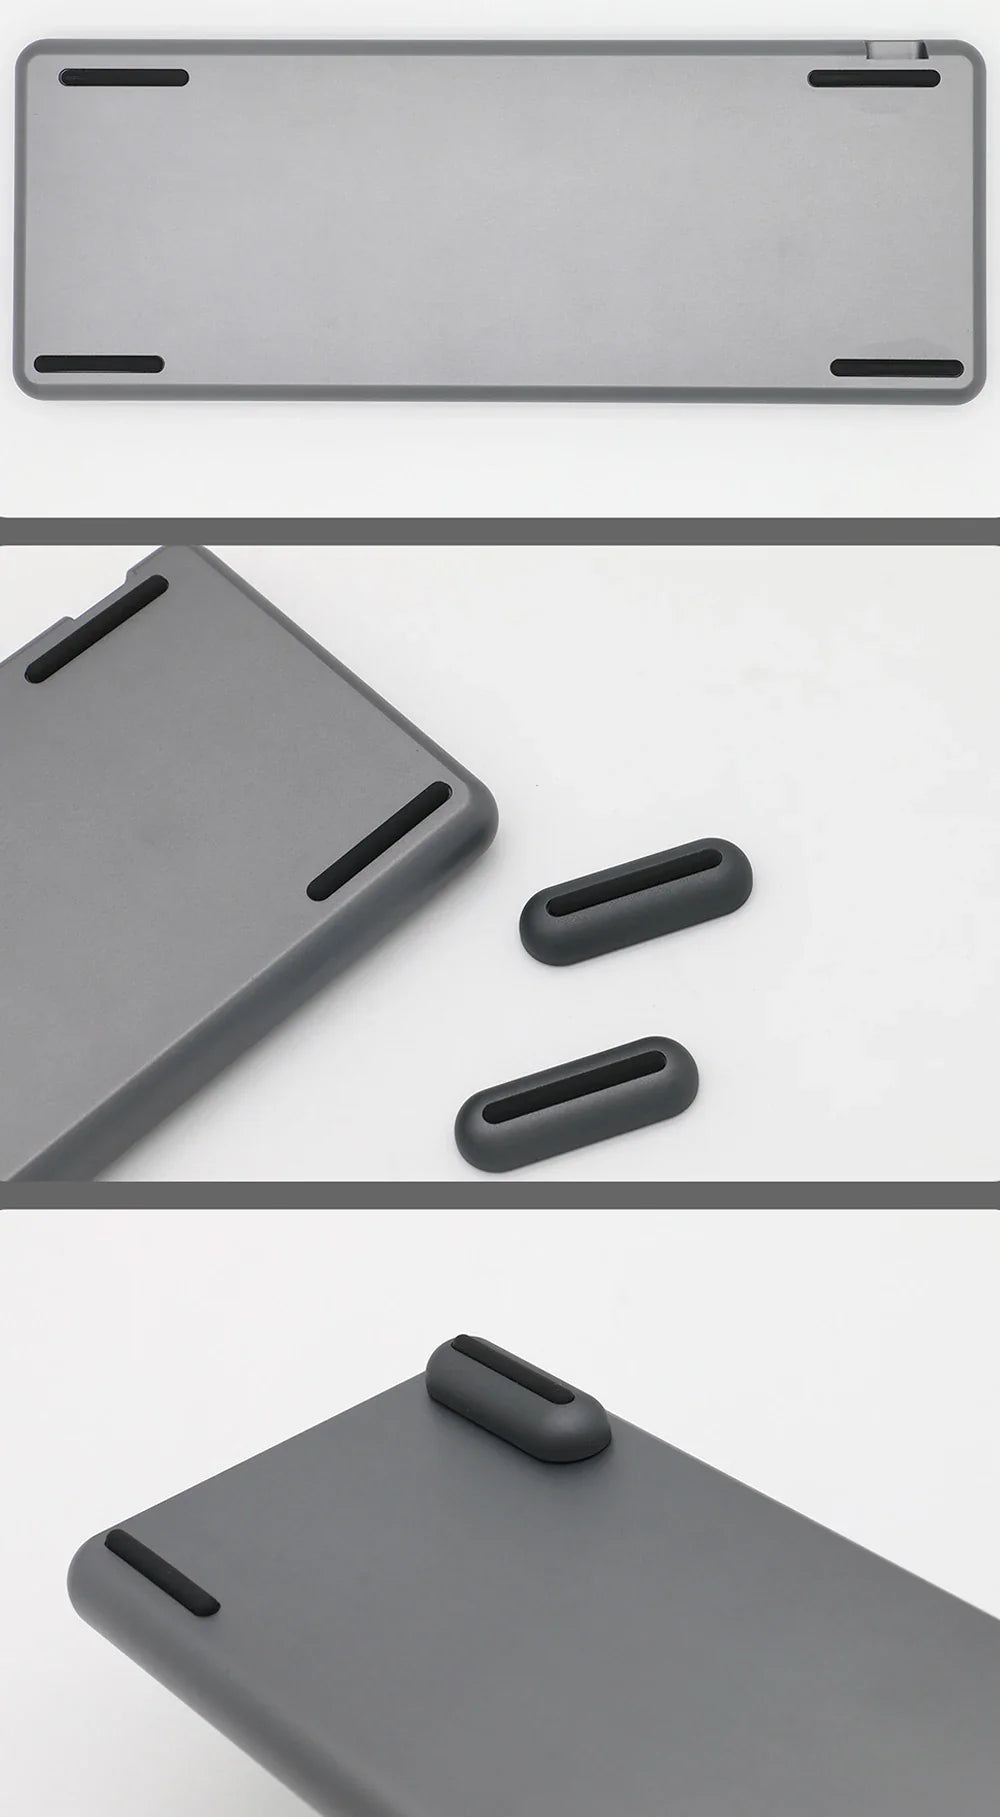 Deep Grey KJ61 DIY Kits CNC Aluminum Shell RGB Hot Swappable Wired Keyboard